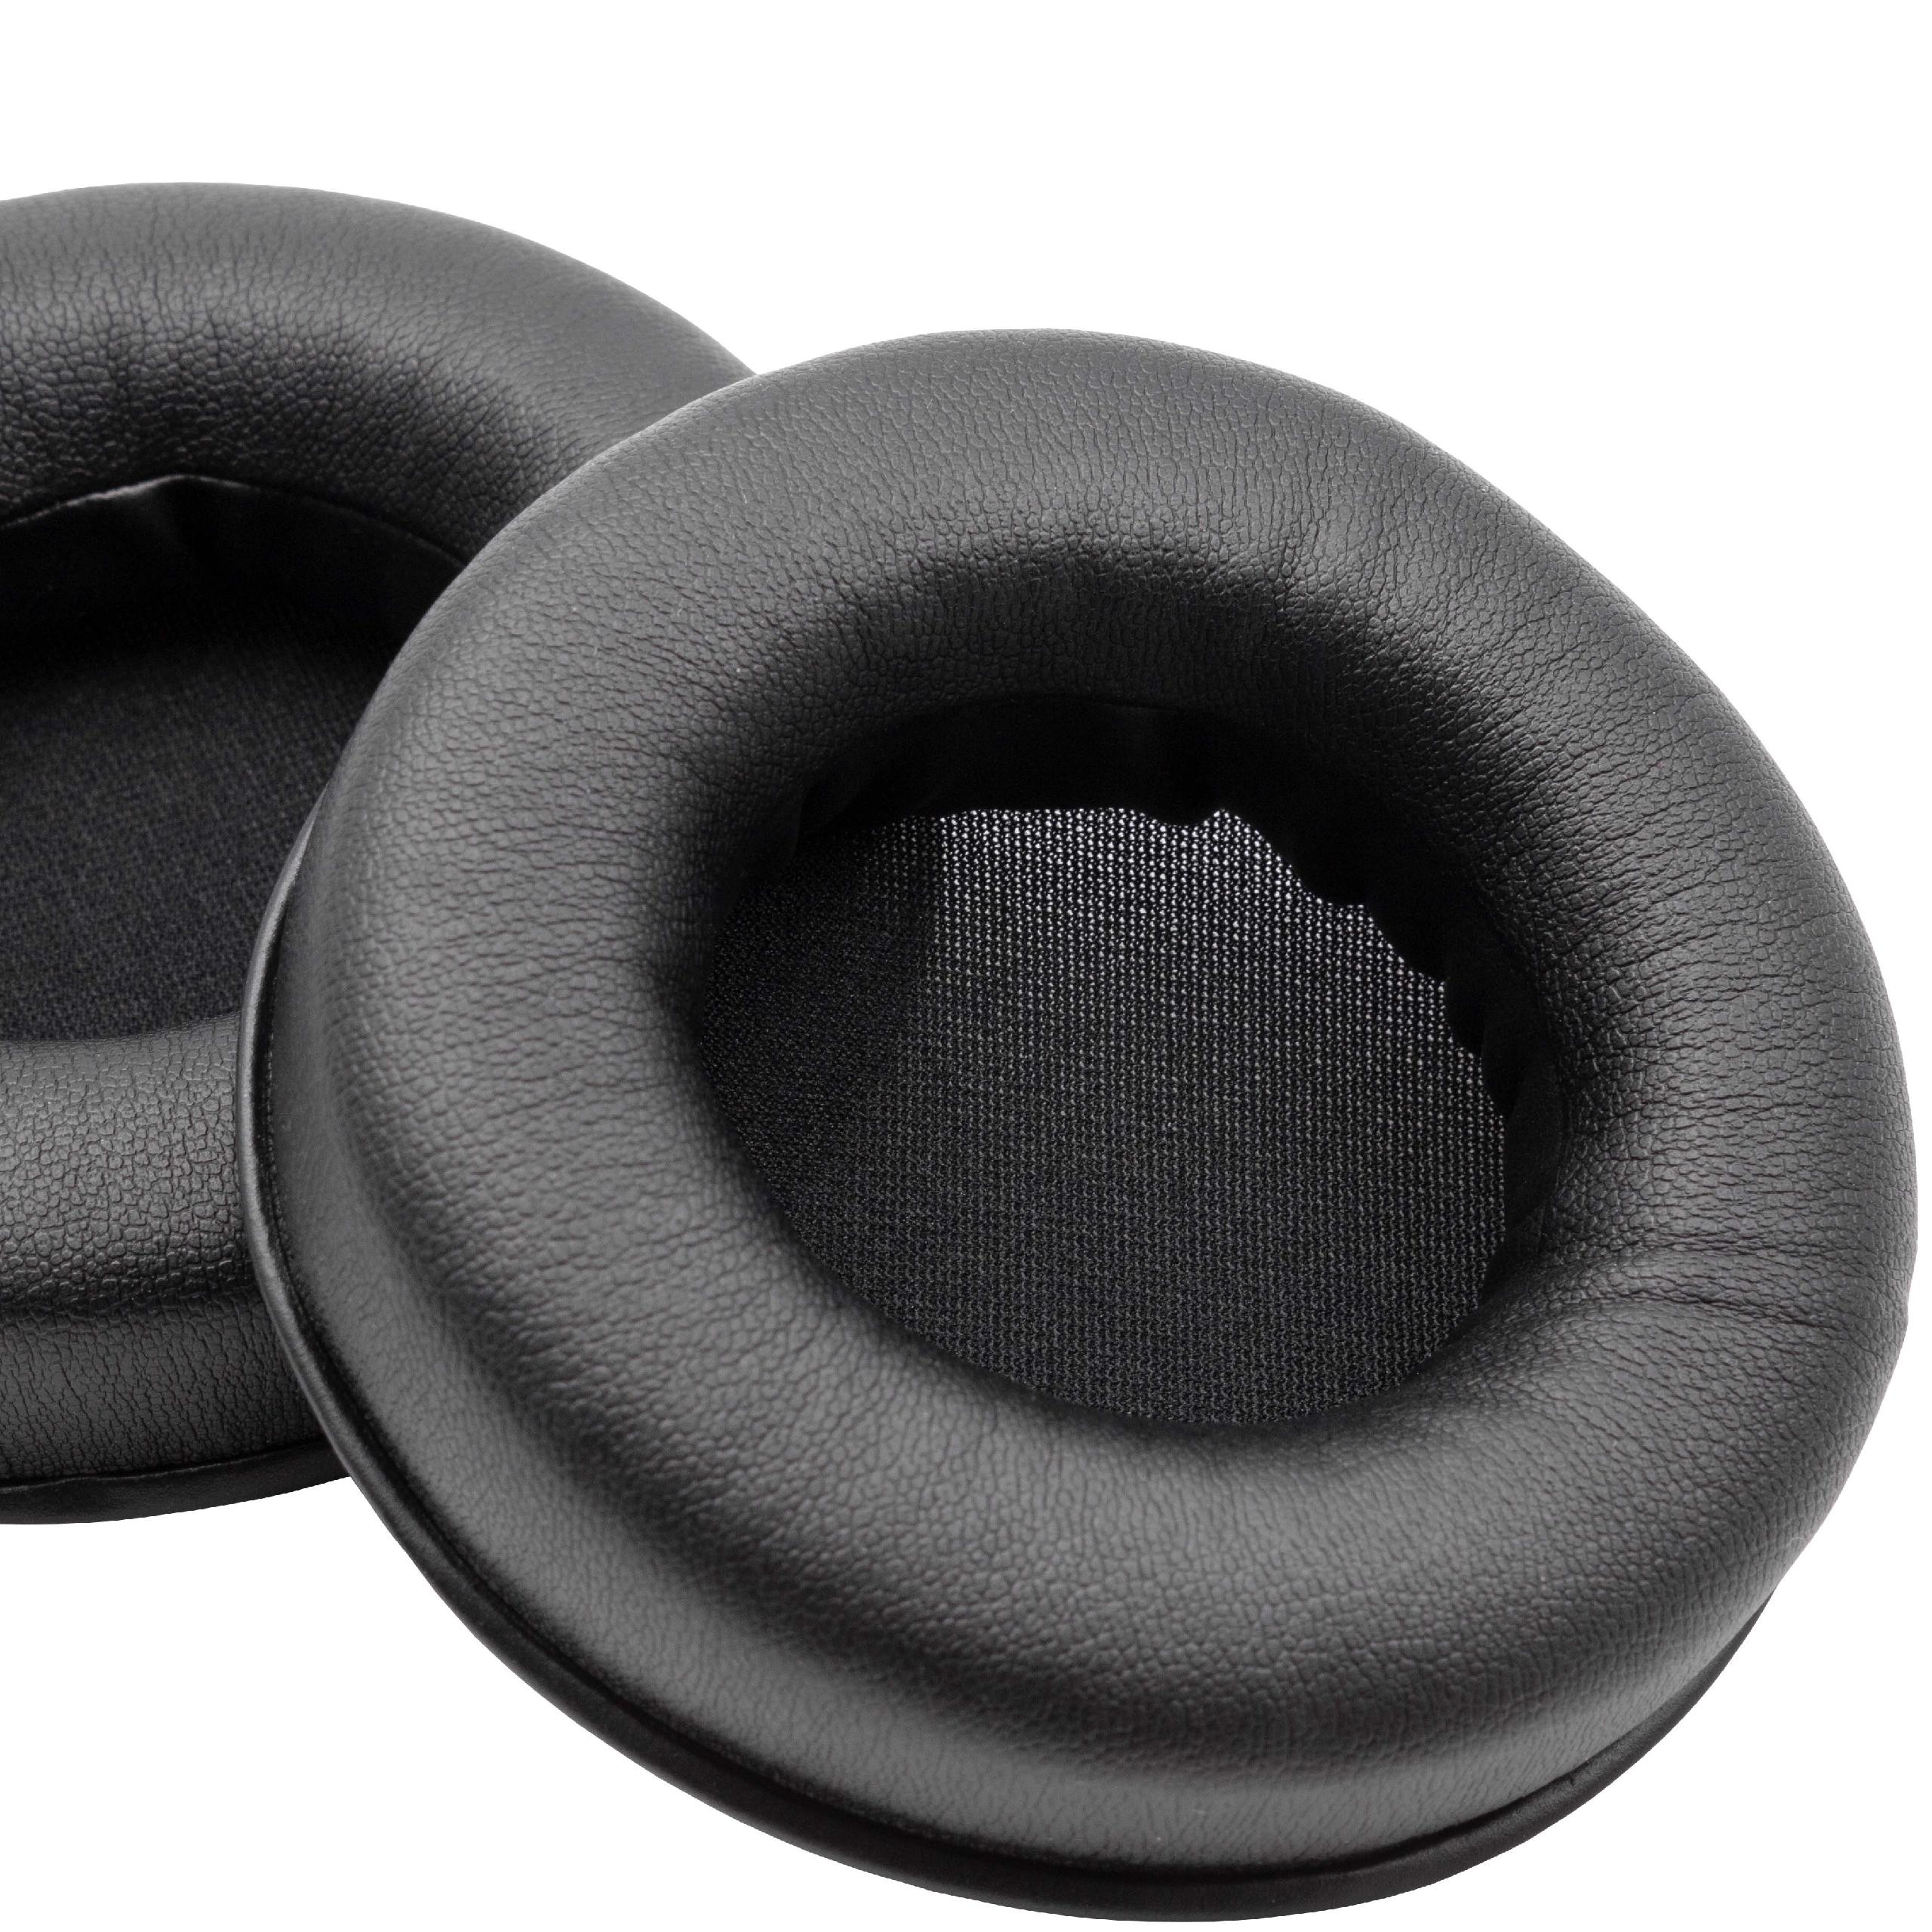 Ear Pads suitable for Razer Kraken Headphones etc. - polyurethane / foam, 8.7 cm External Diameter